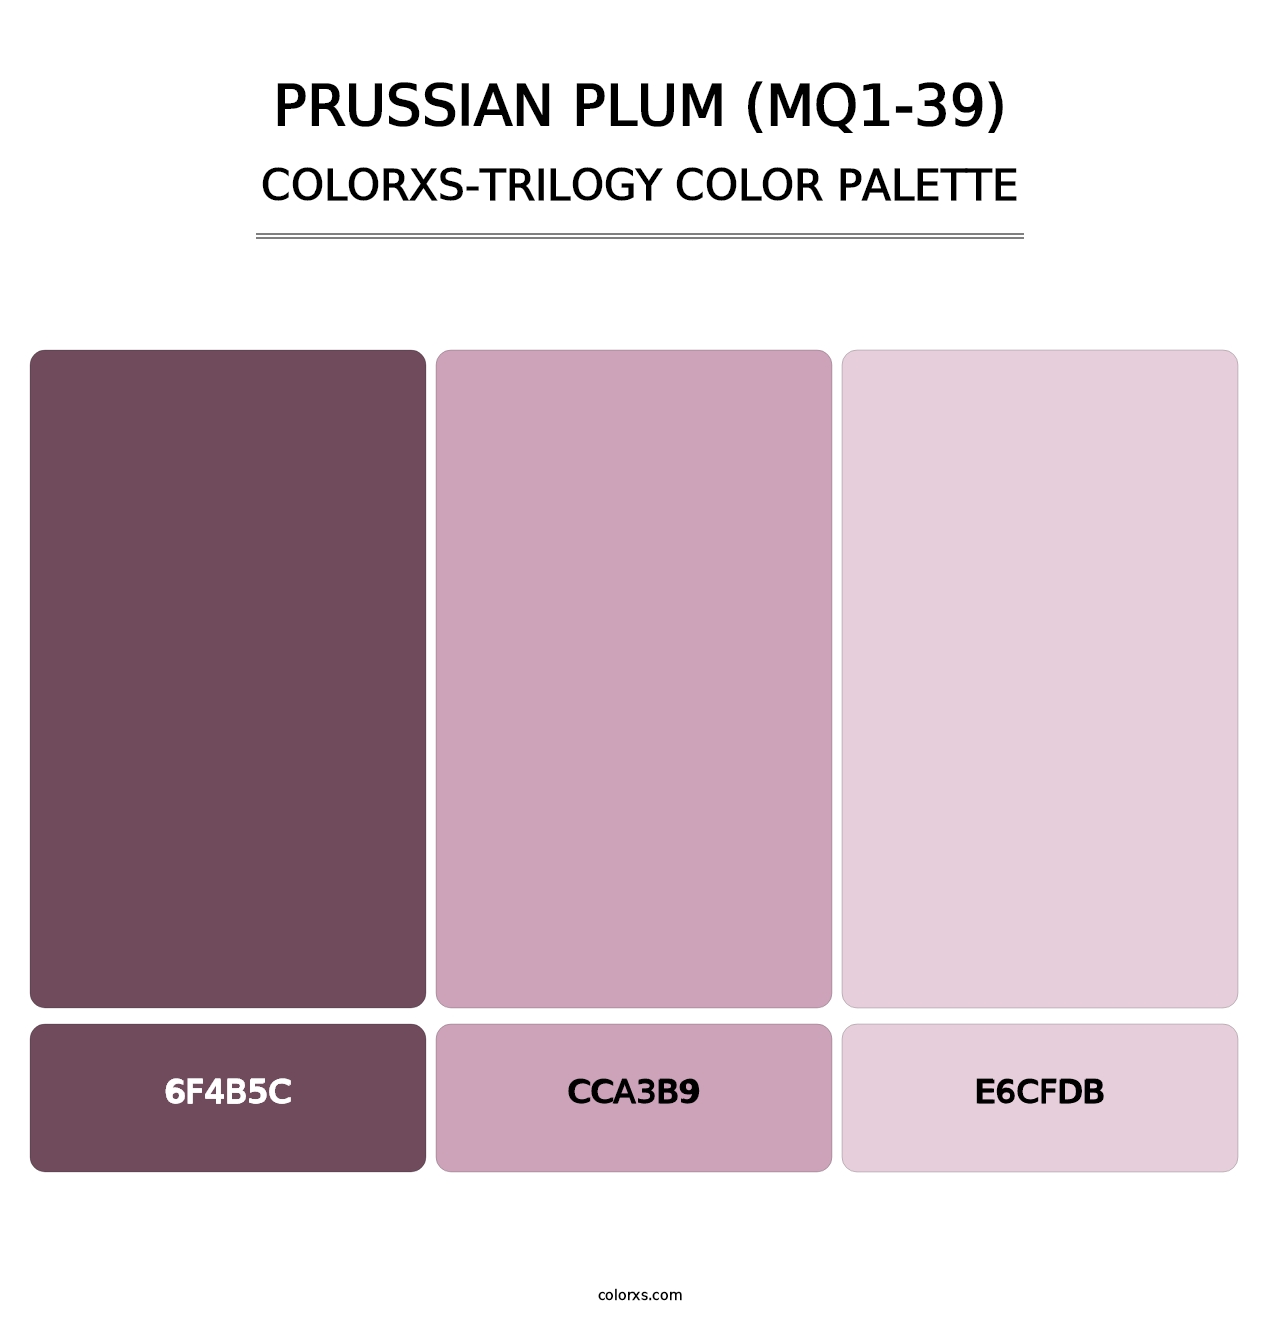 Prussian Plum (MQ1-39) - Colorxs Trilogy Palette